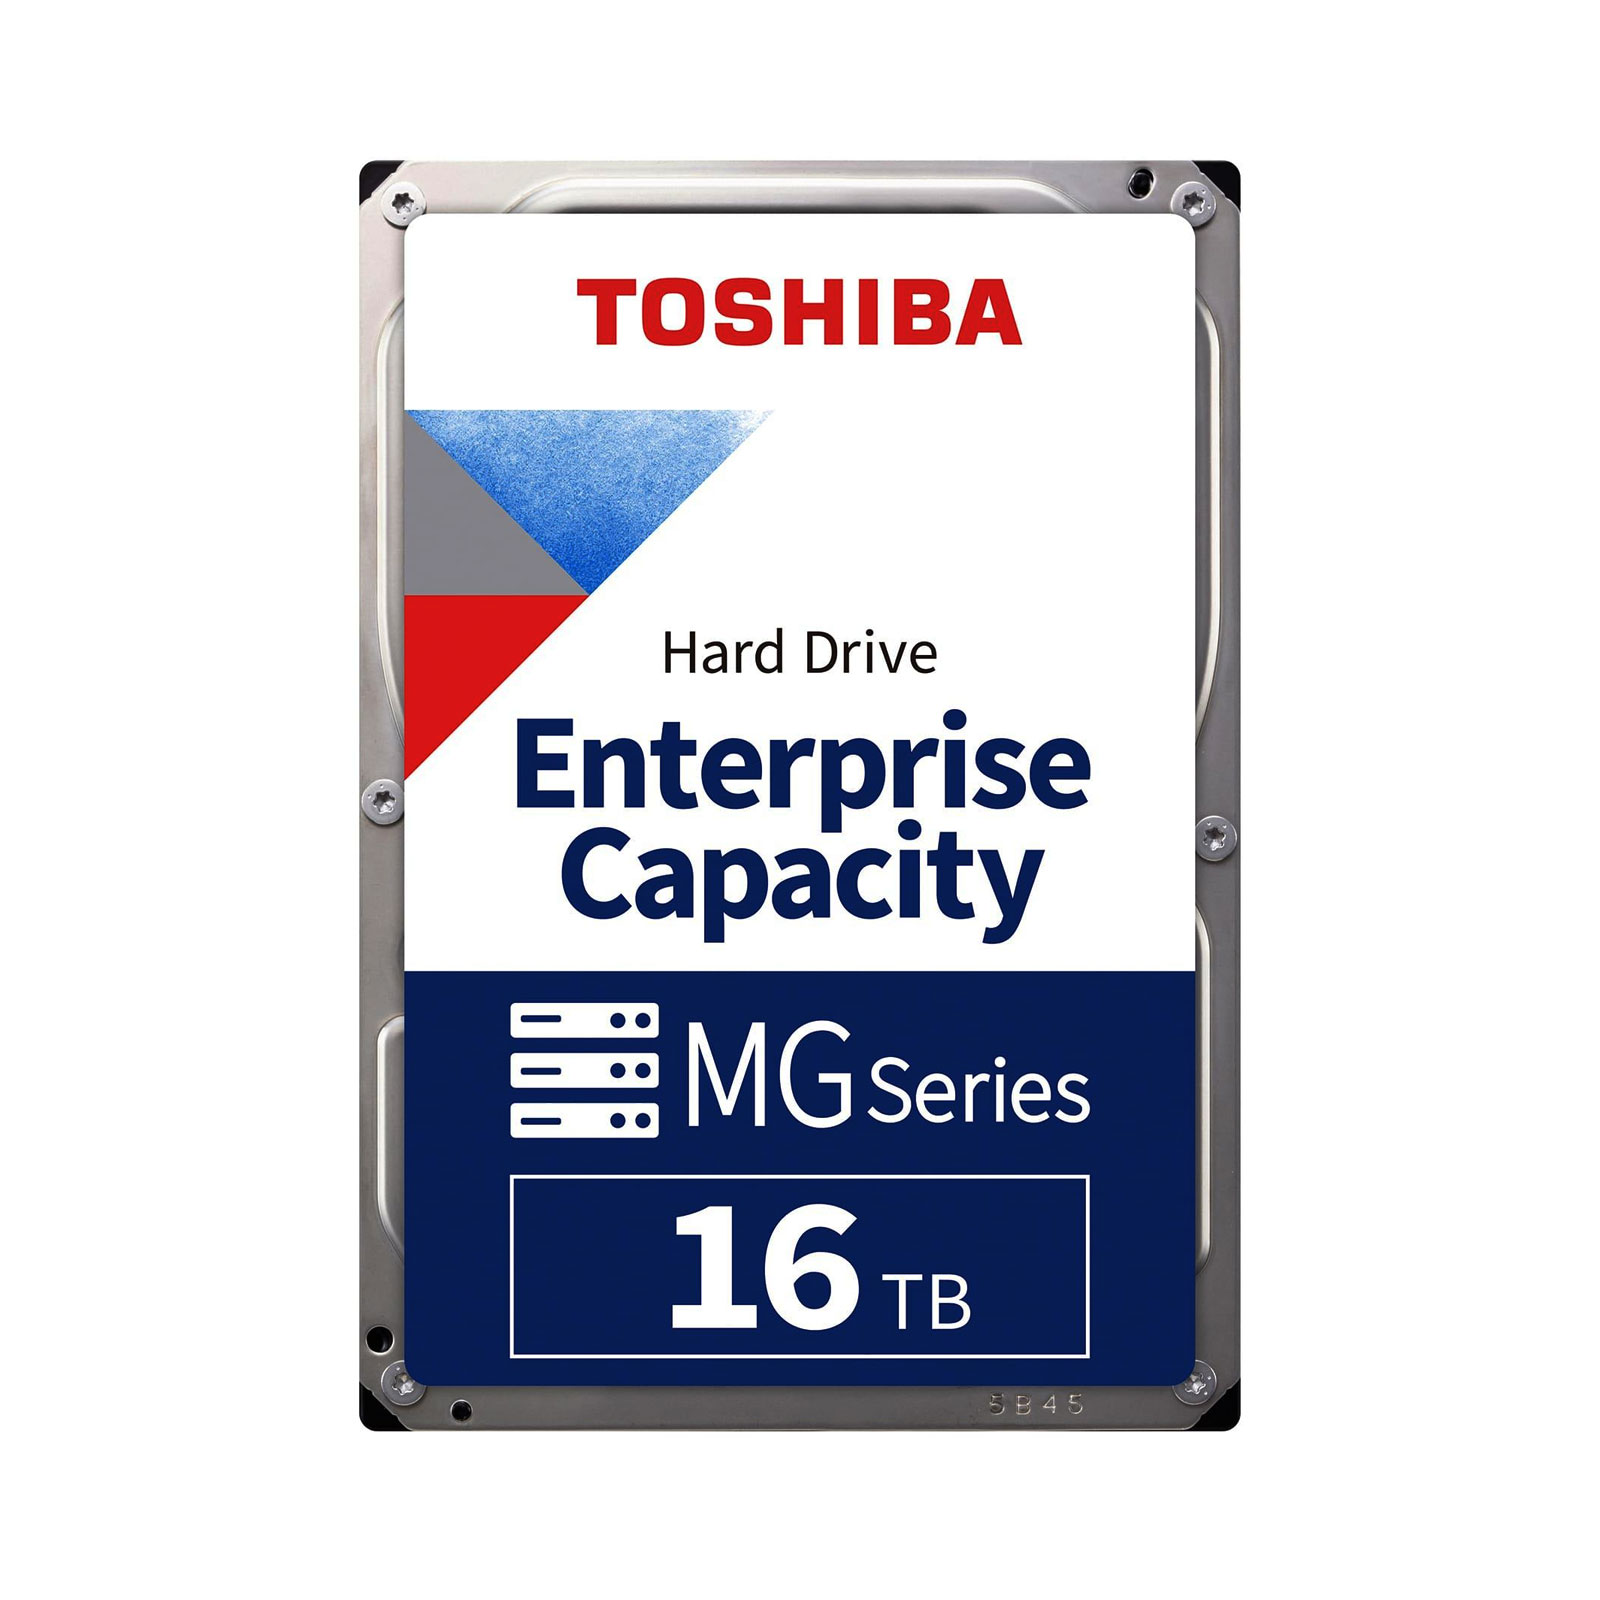 TOSHIBA Enterprice Capacity Series MG08ACA16TE 16 TB Interne HDD-Festplatte